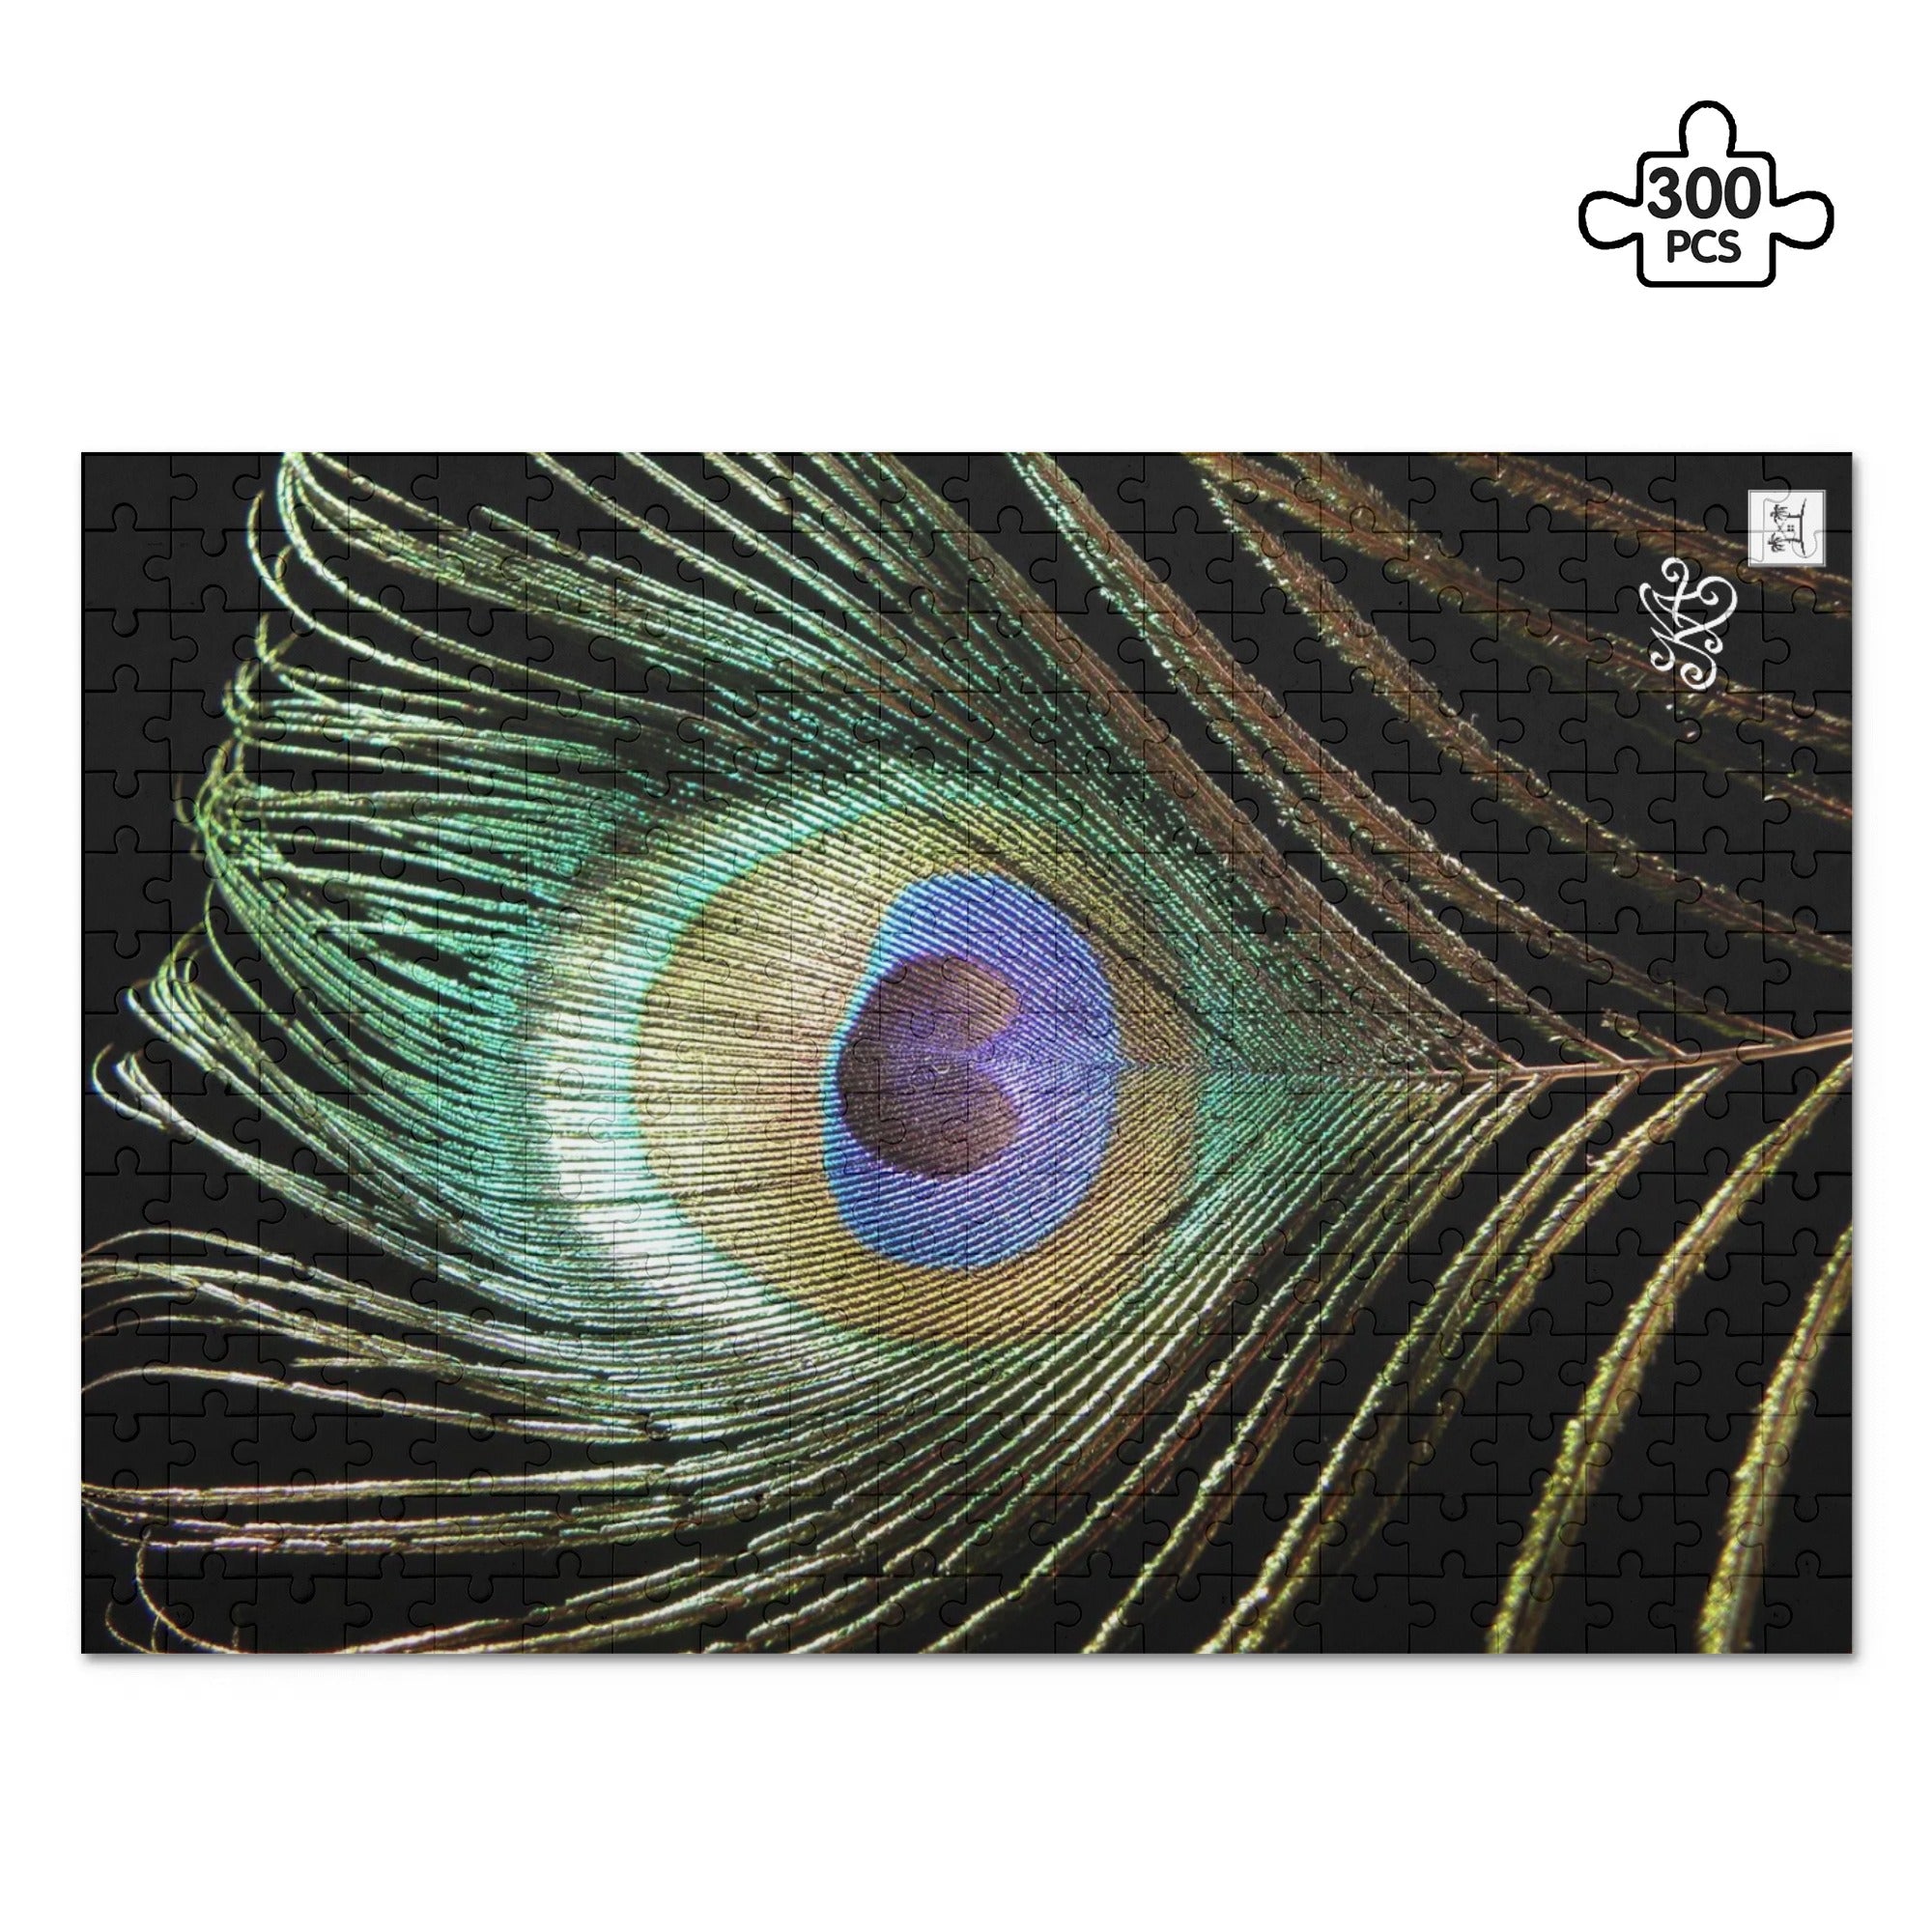 Wooden Jigsaw Puzzle (300 Pcs) - Sapphire Eye